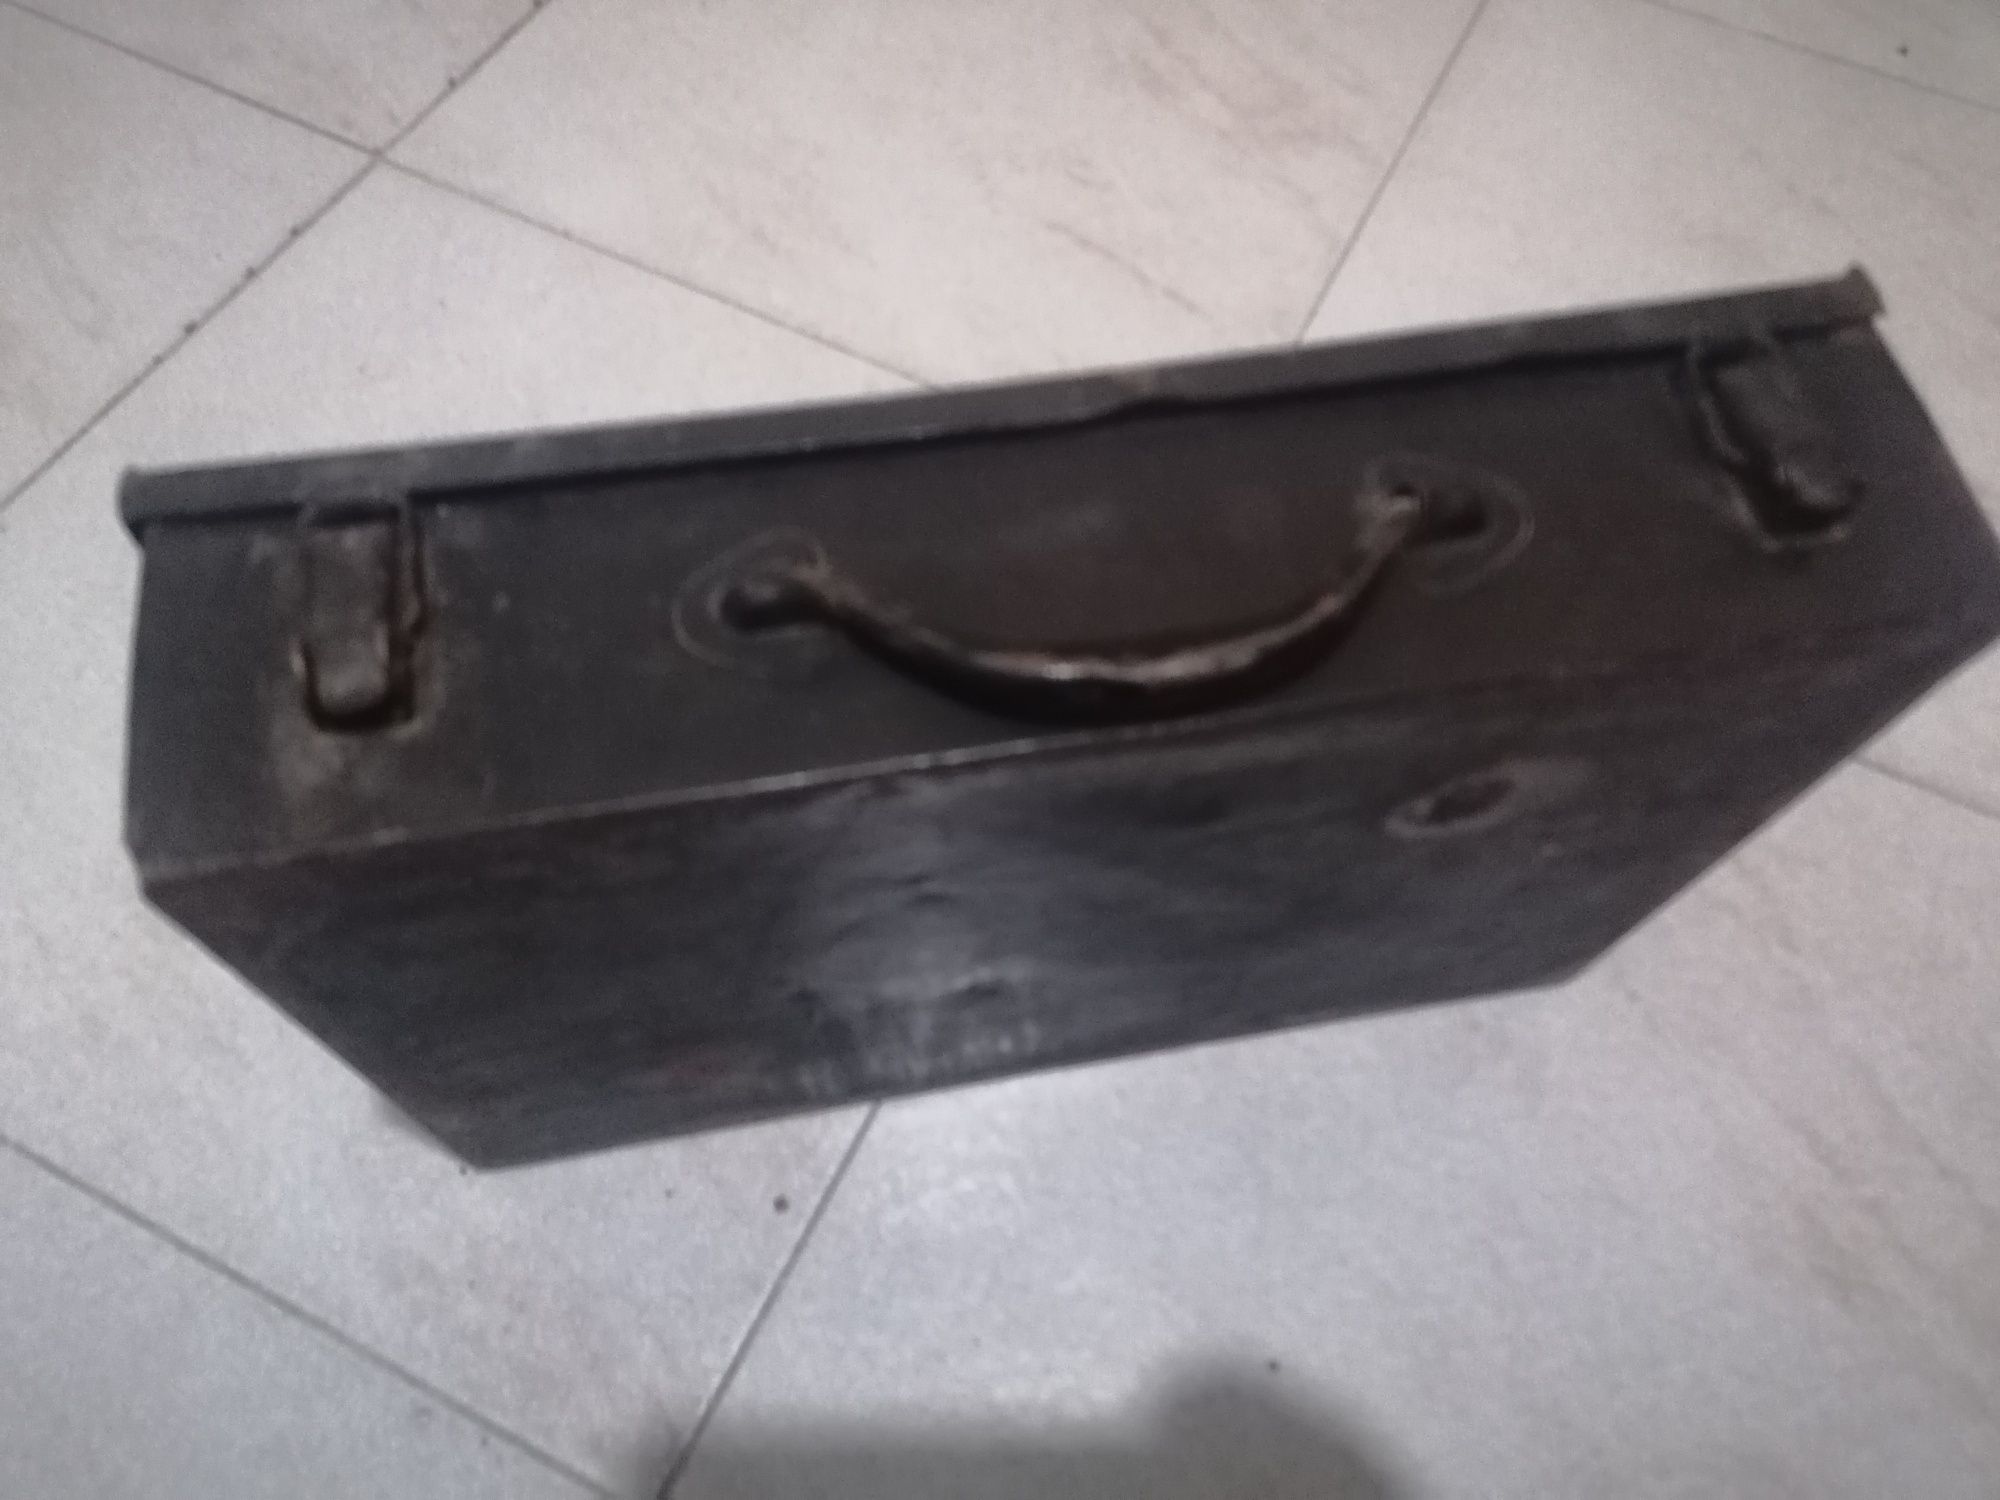 Antiga caixa de ferramentas em metal

30x40cm

A levantar em Lisboa, S